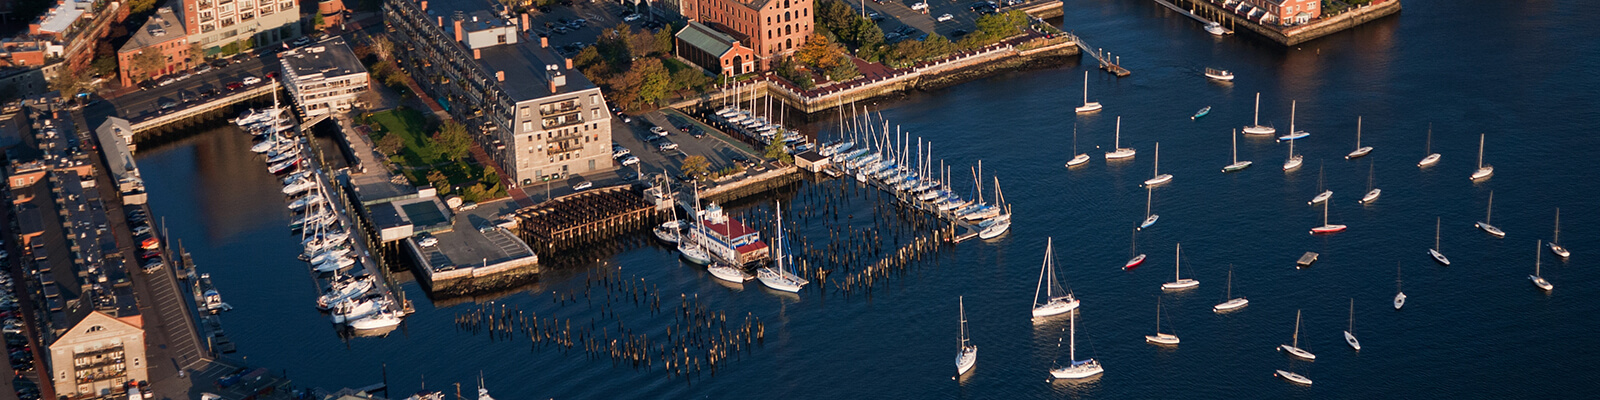 Boston Historic Sightseeing Cruise Coupons